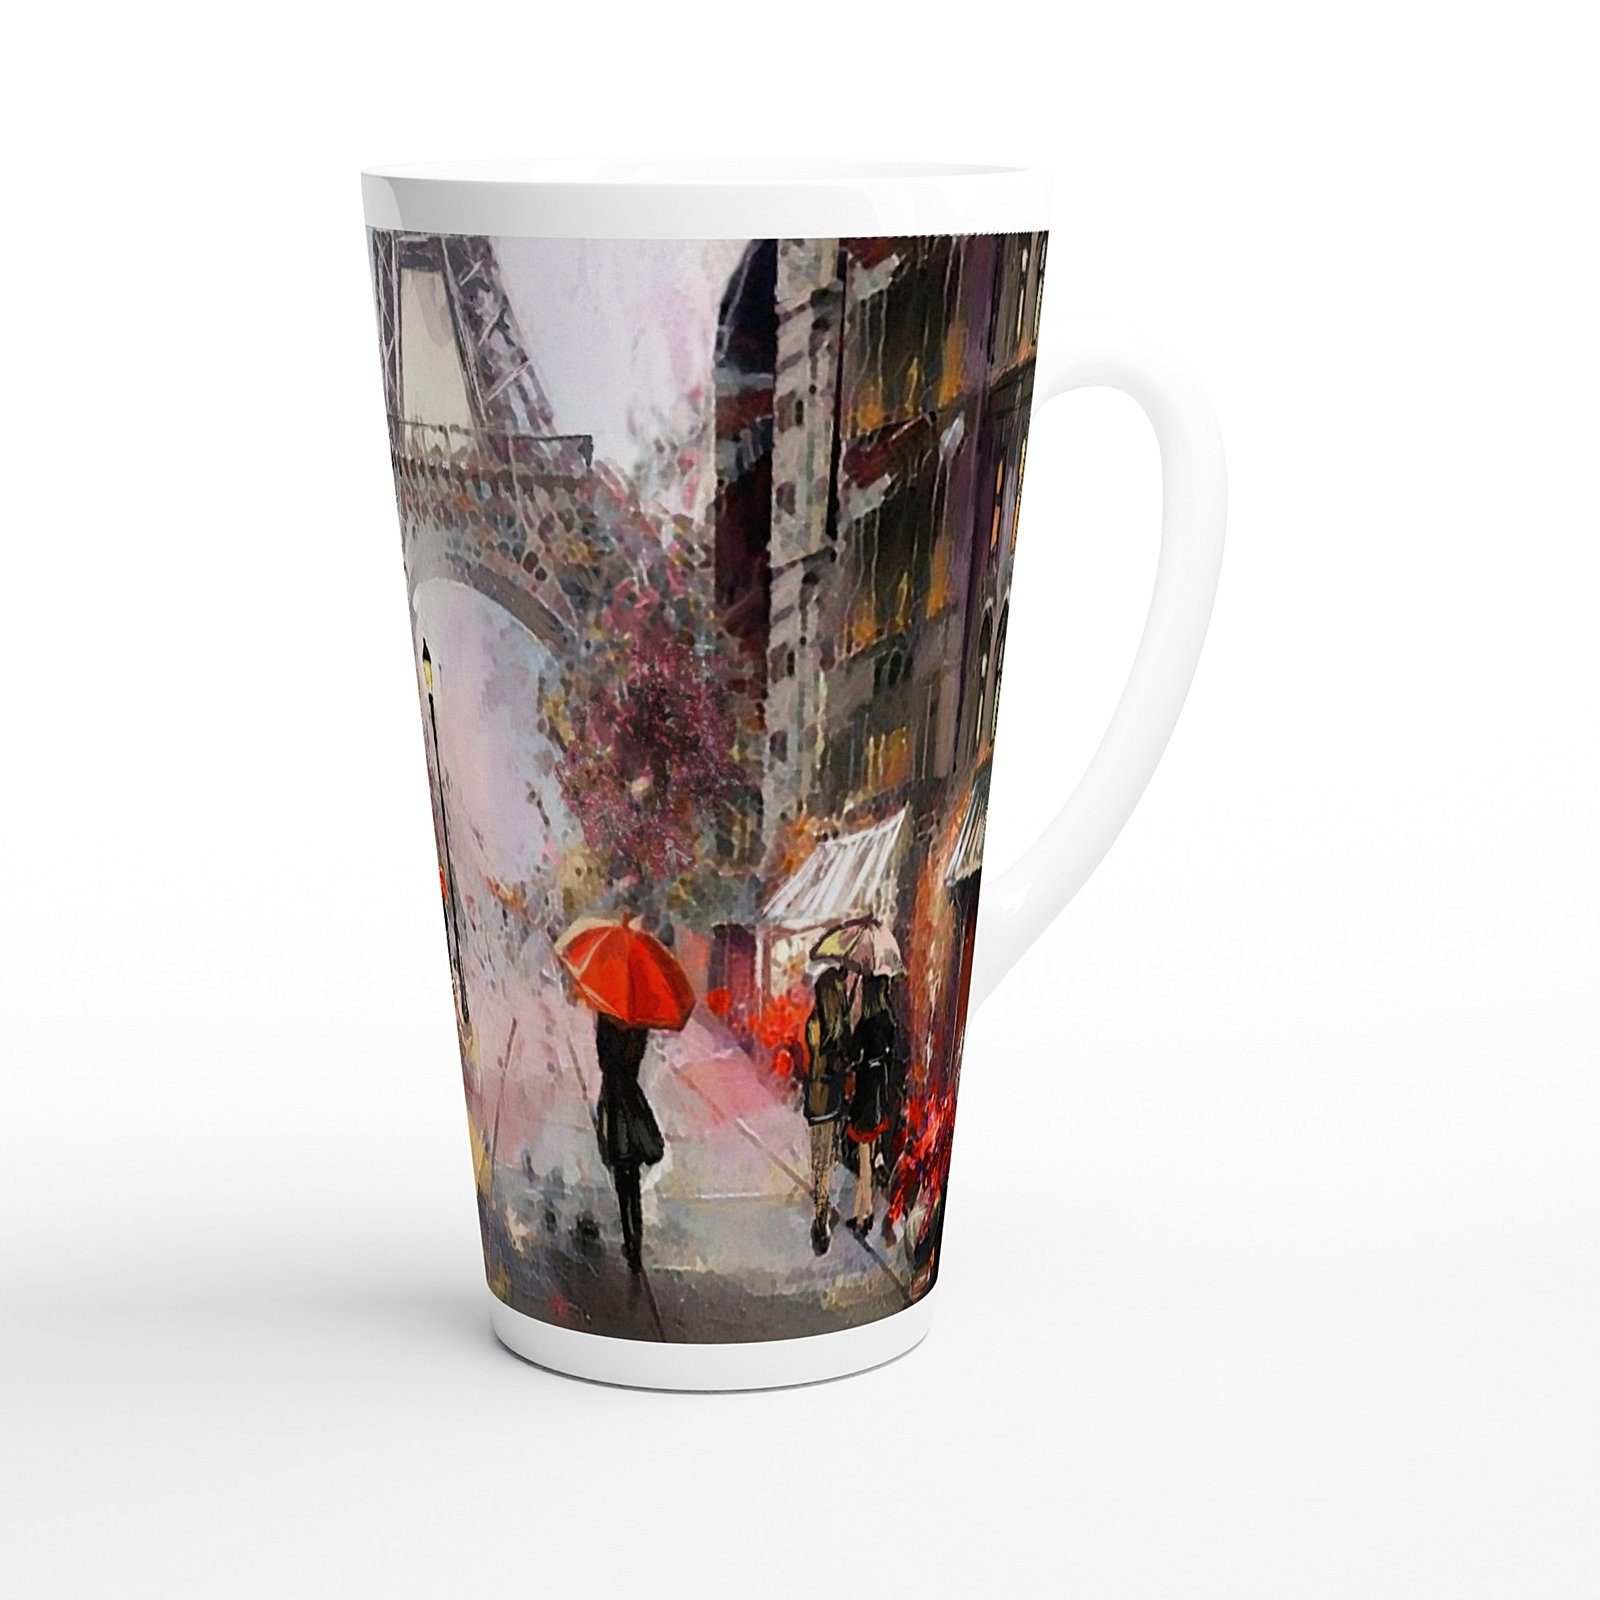 Alltagszauber Latte-Macchiato-Tasse Jumbo-Tasse PARIS, Keramik, extra groß, für 500ml Inhalt